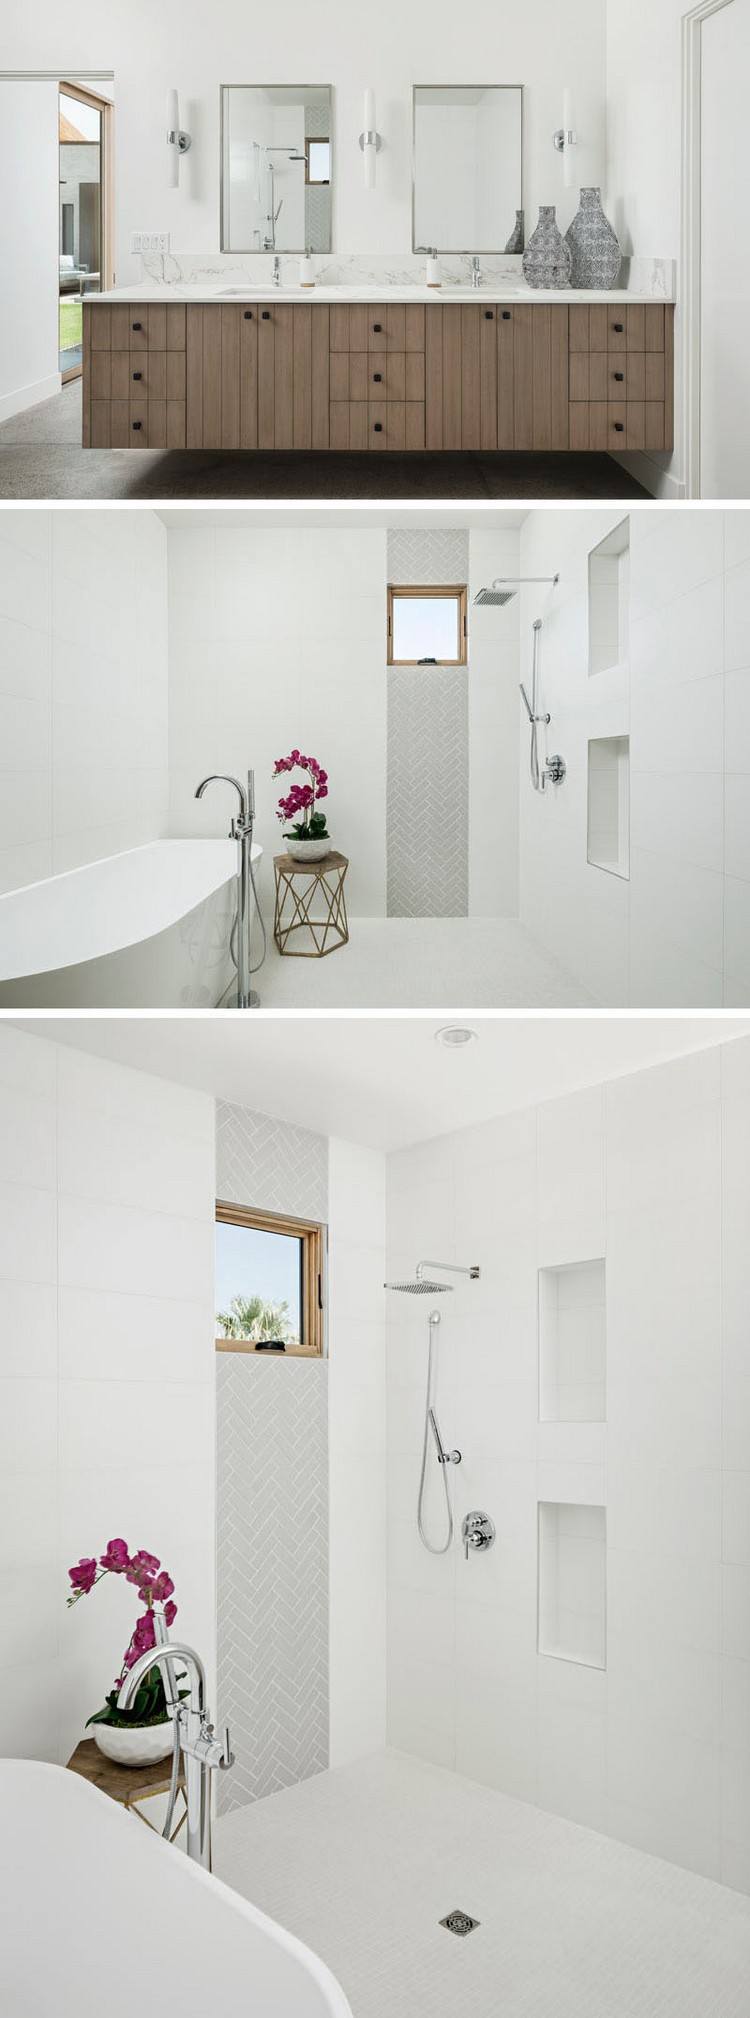 badrum design vit dusch badkar